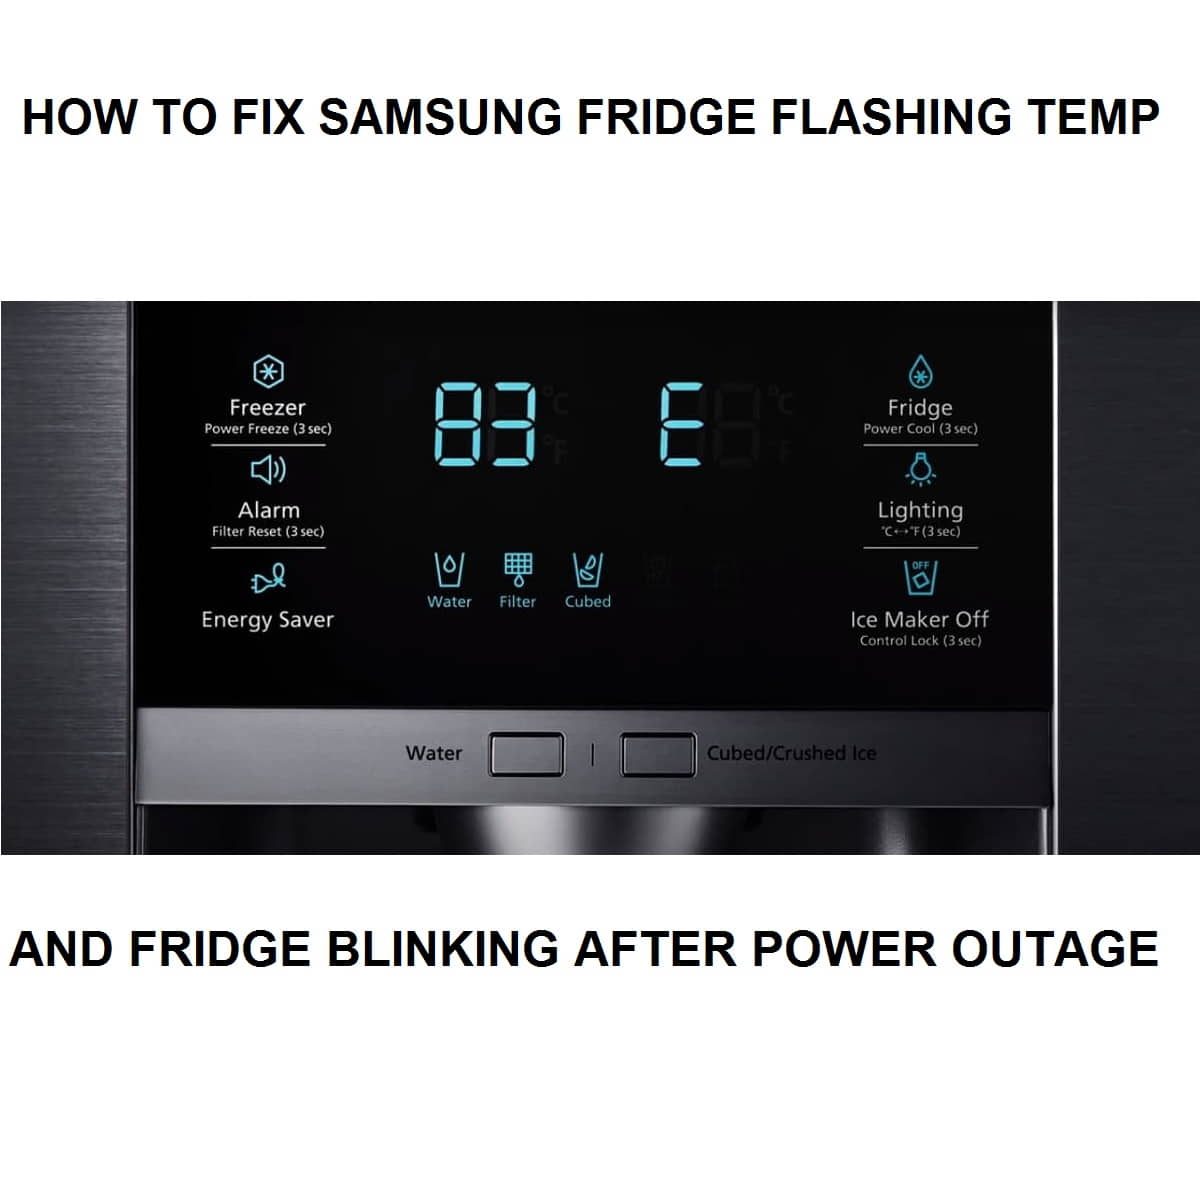 Samsung fridge flashing temp [Causes and fixes] - MachineLounge